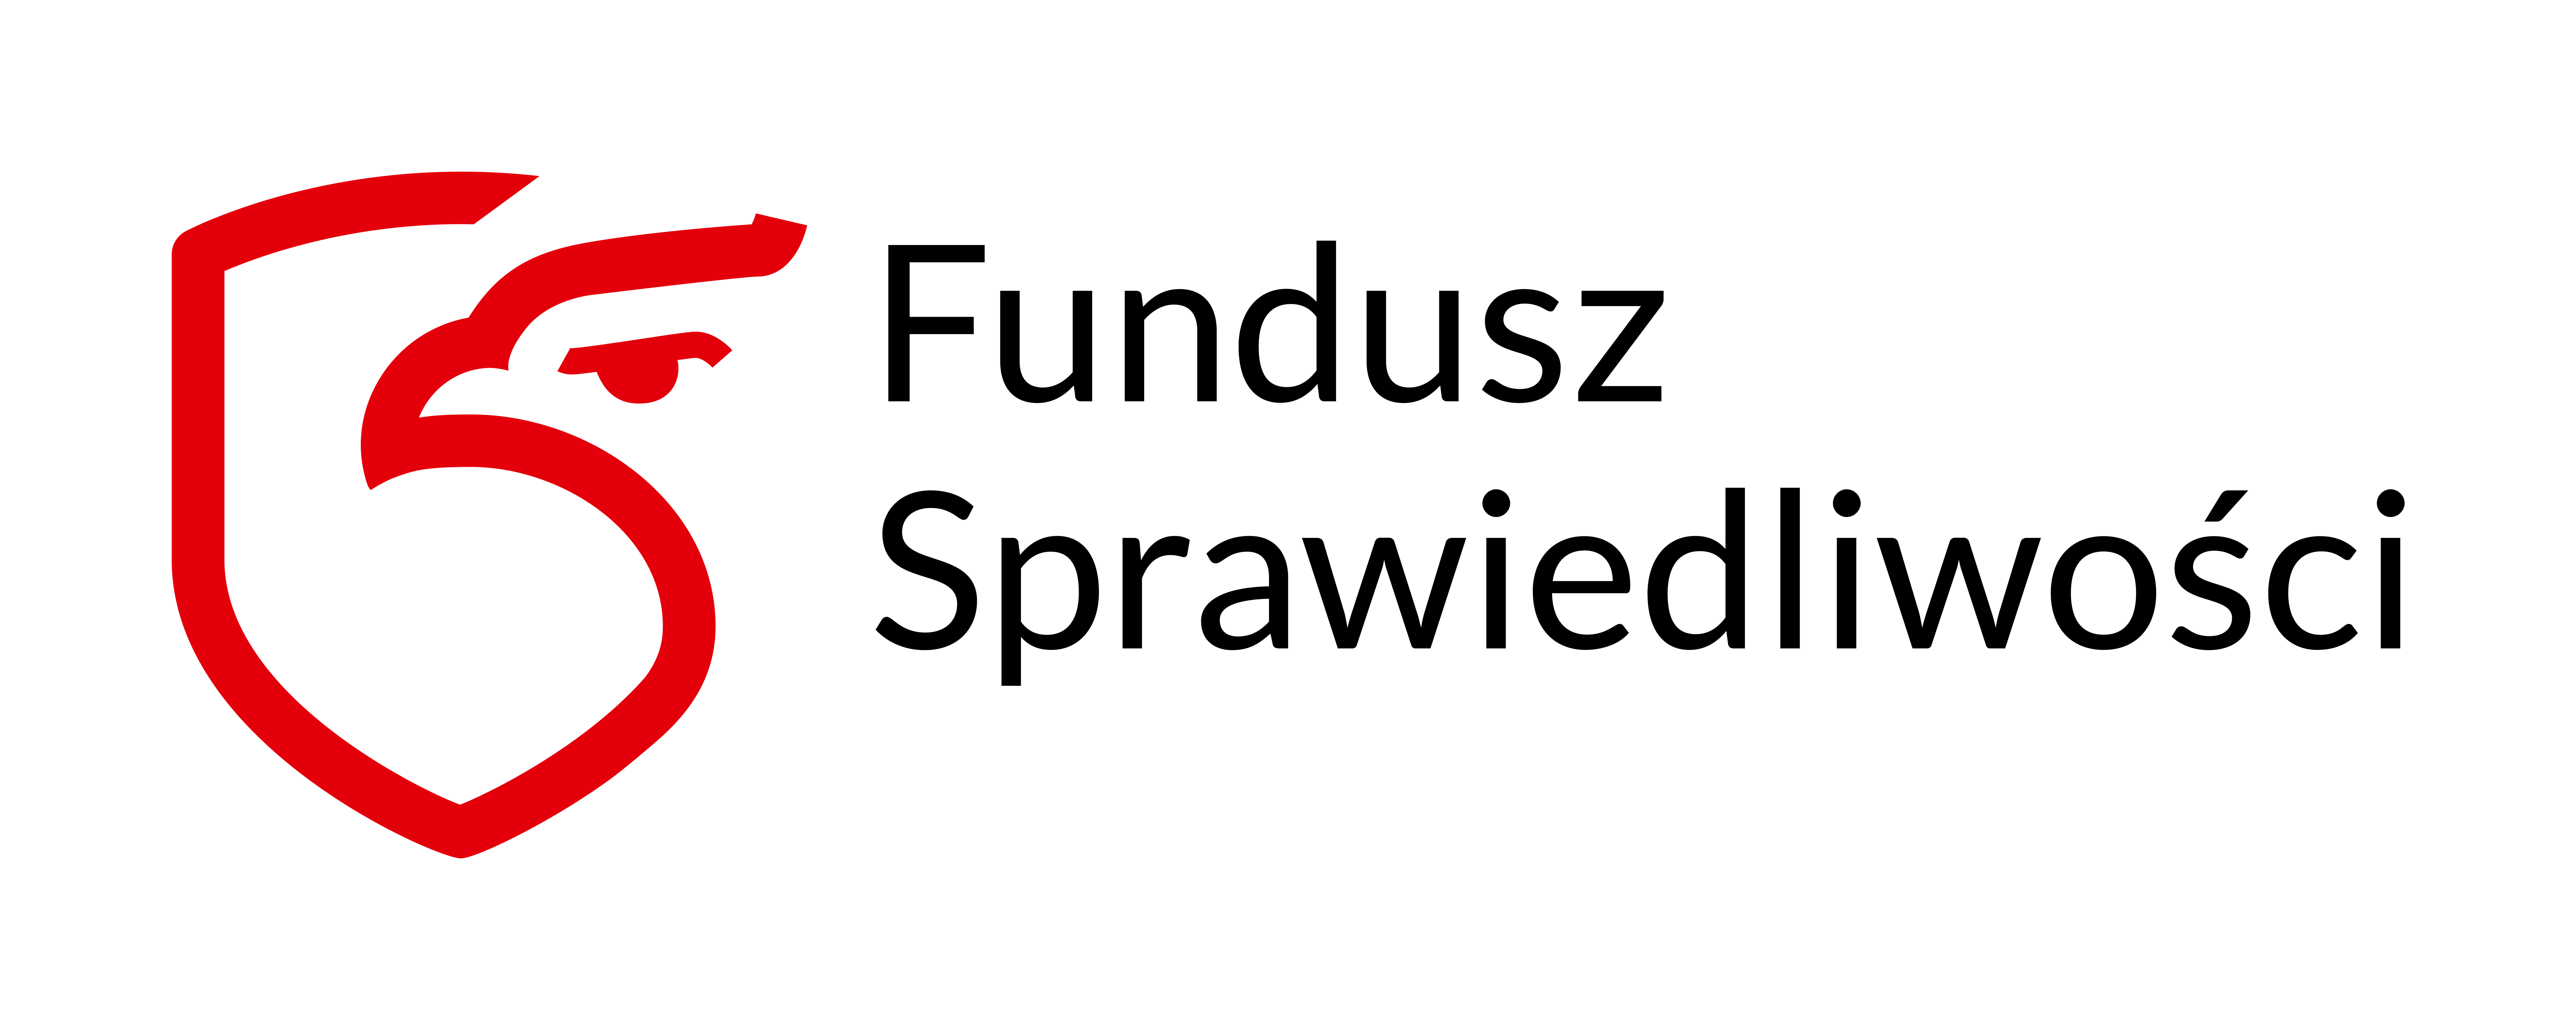 FS-logotyp_kolor kopia